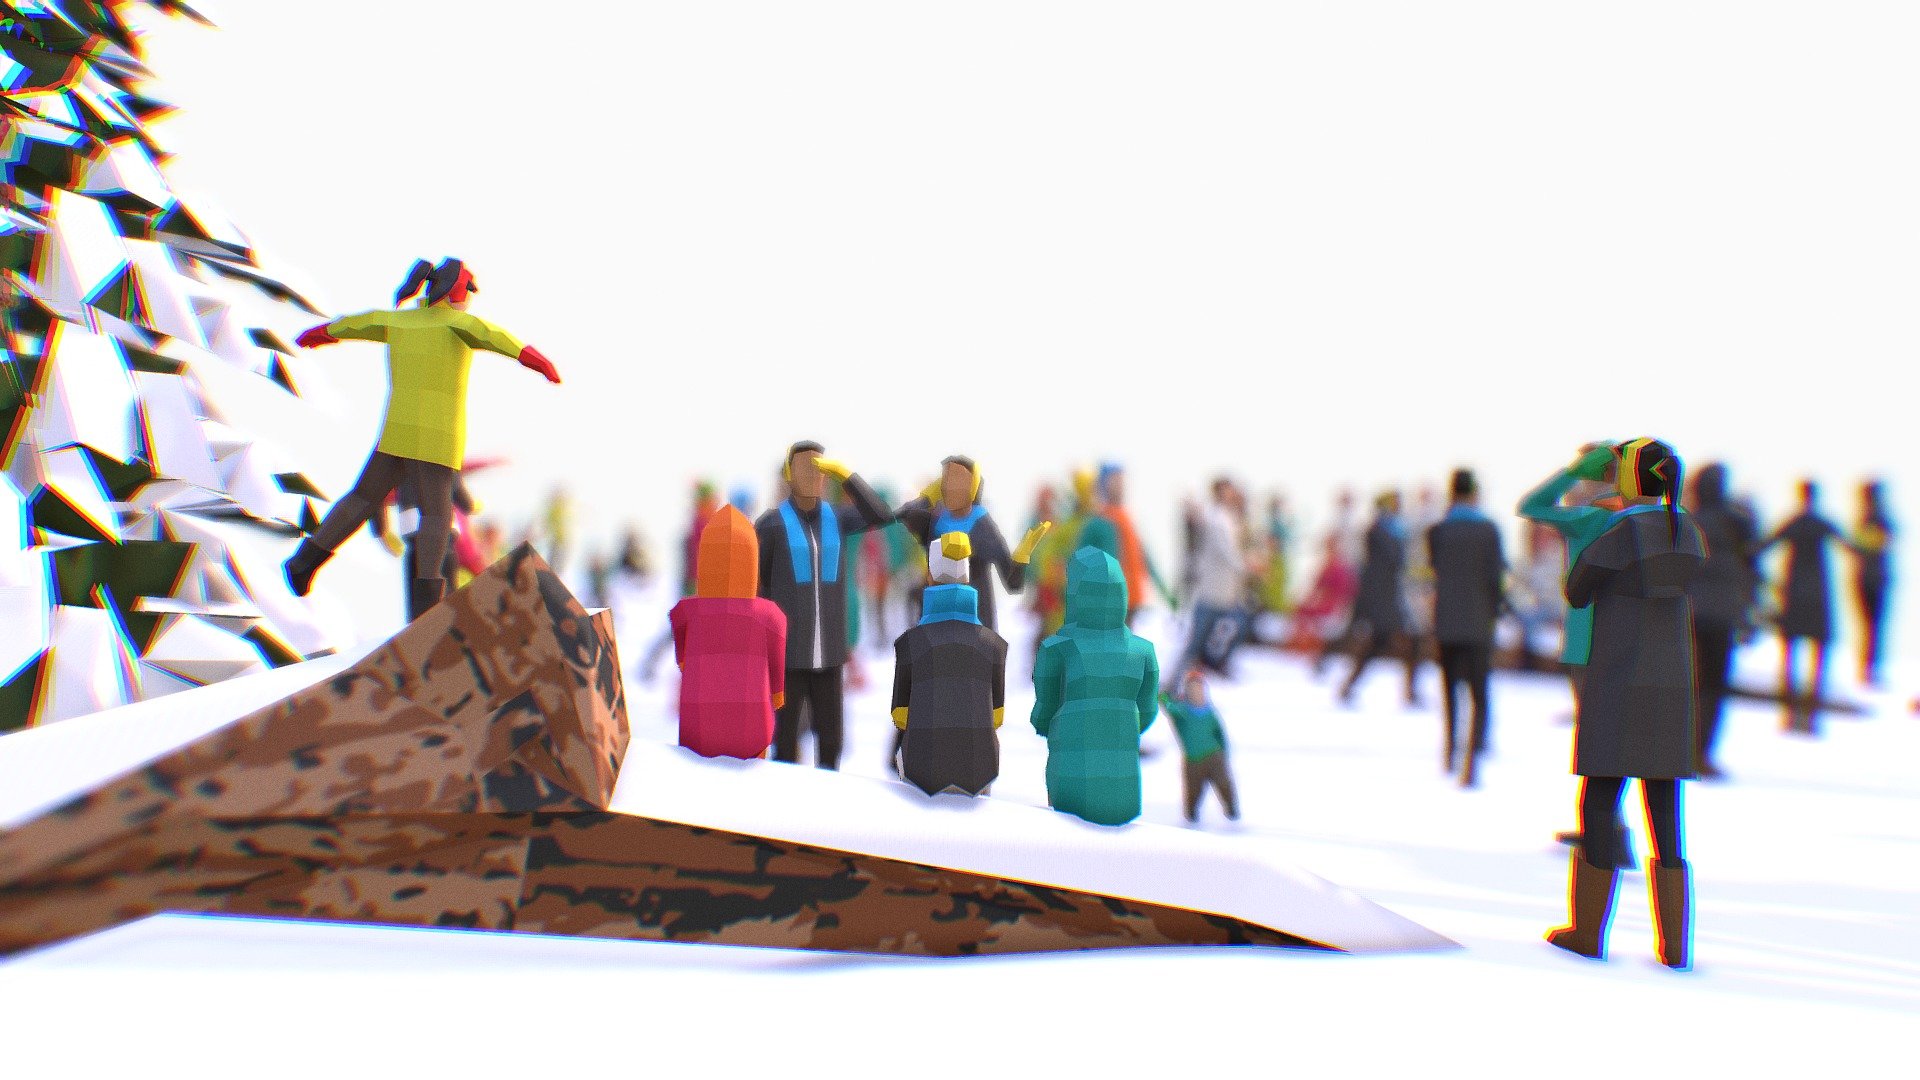 3,192 Miniature People Snow Images, Stock Photos, 3D objects, & Vectors